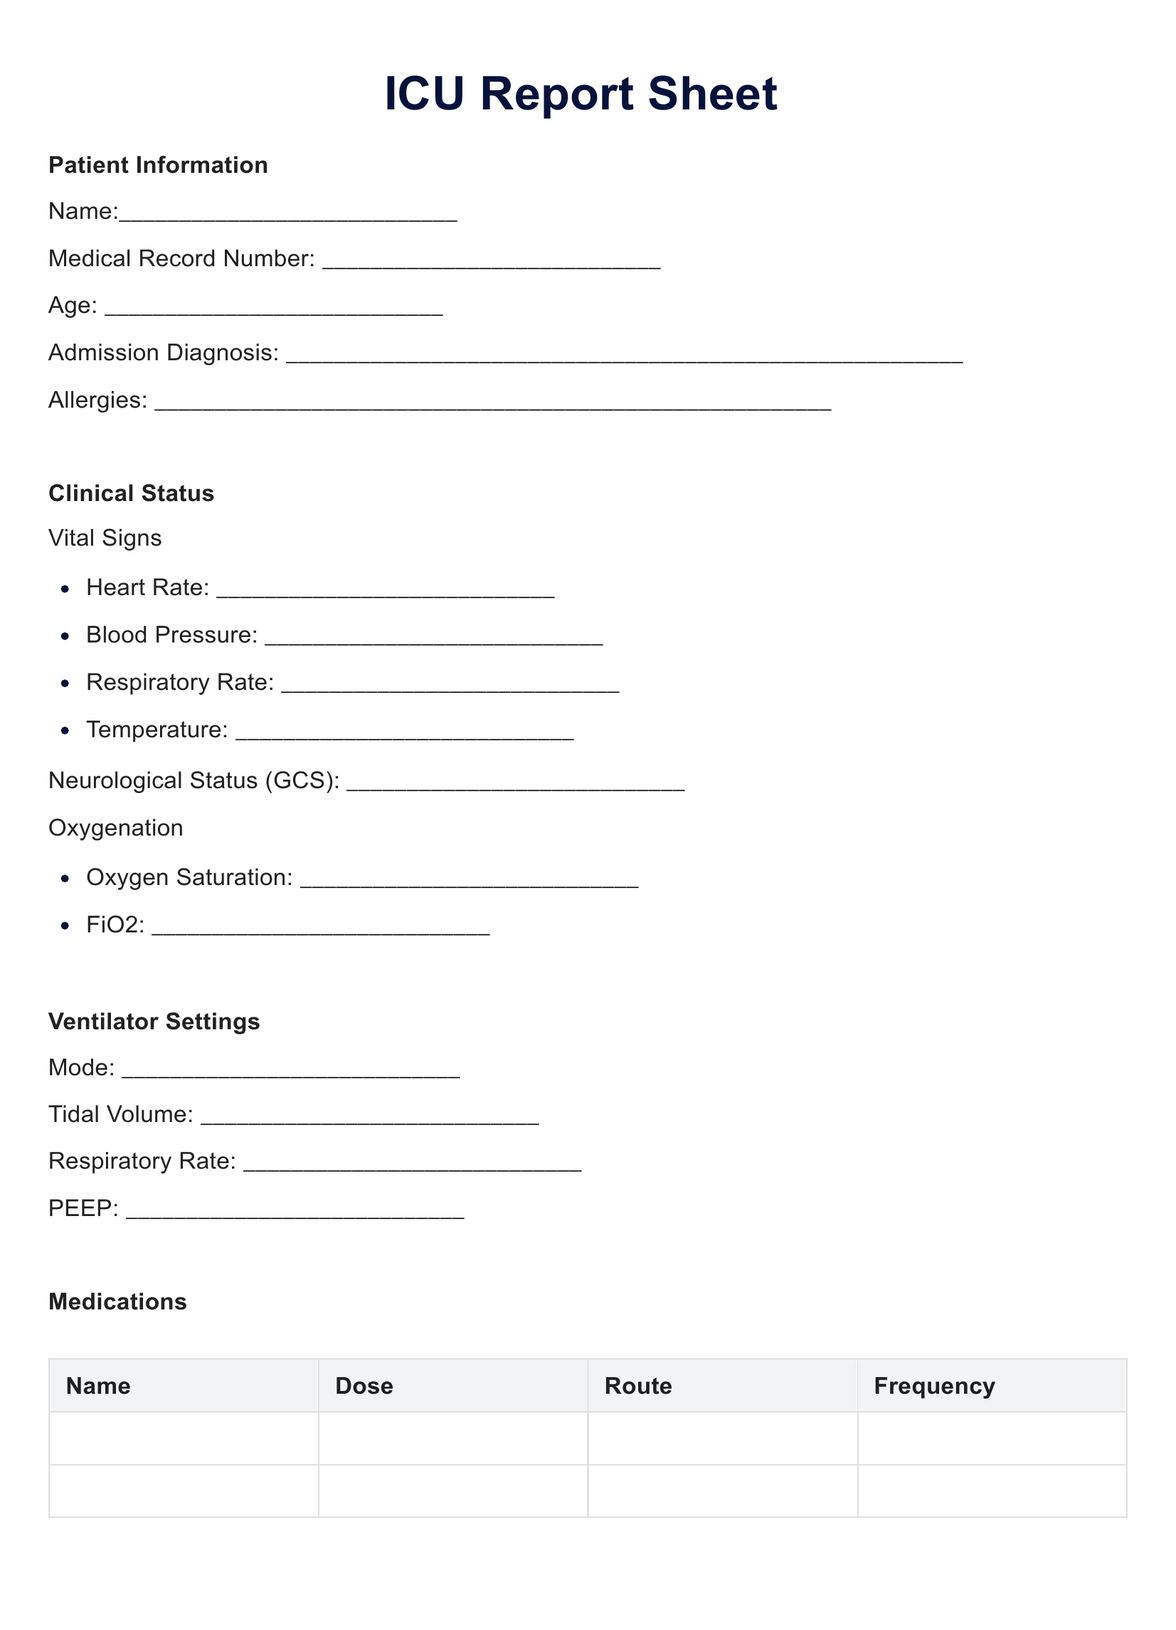 ICU Report Sheet Template PDF Example